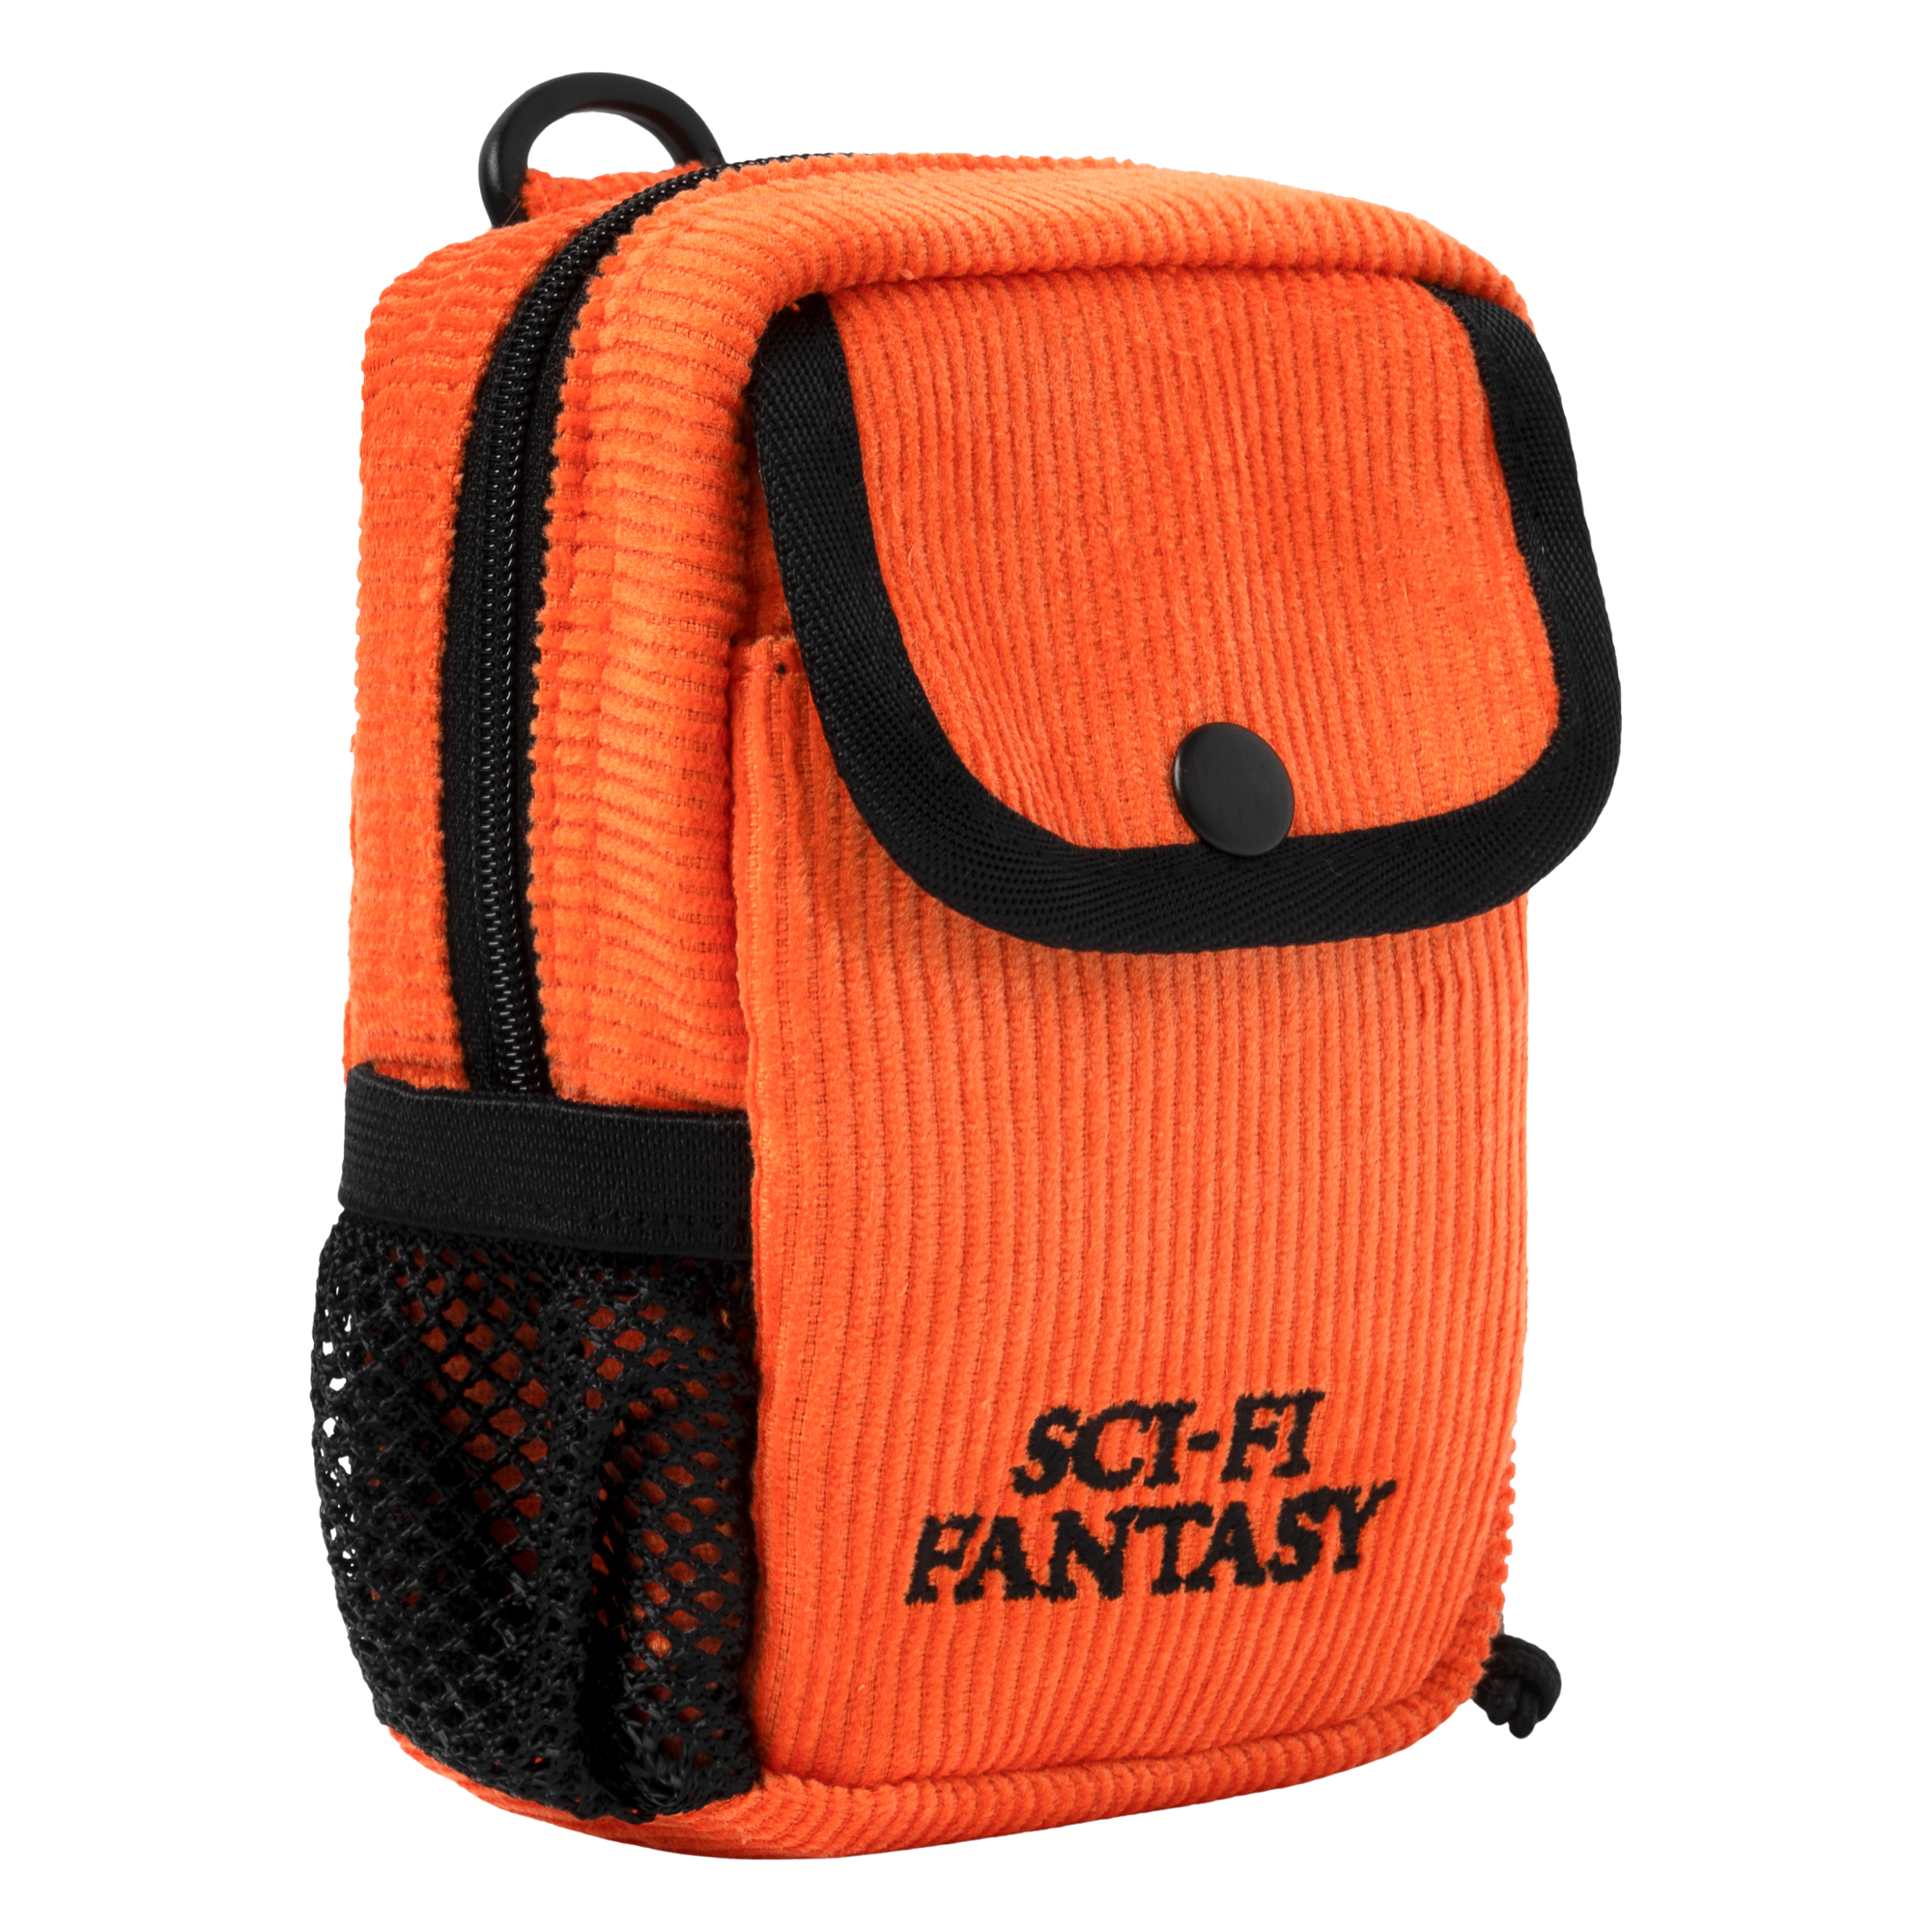 Sci-i Fantasy Camera Pack Orange